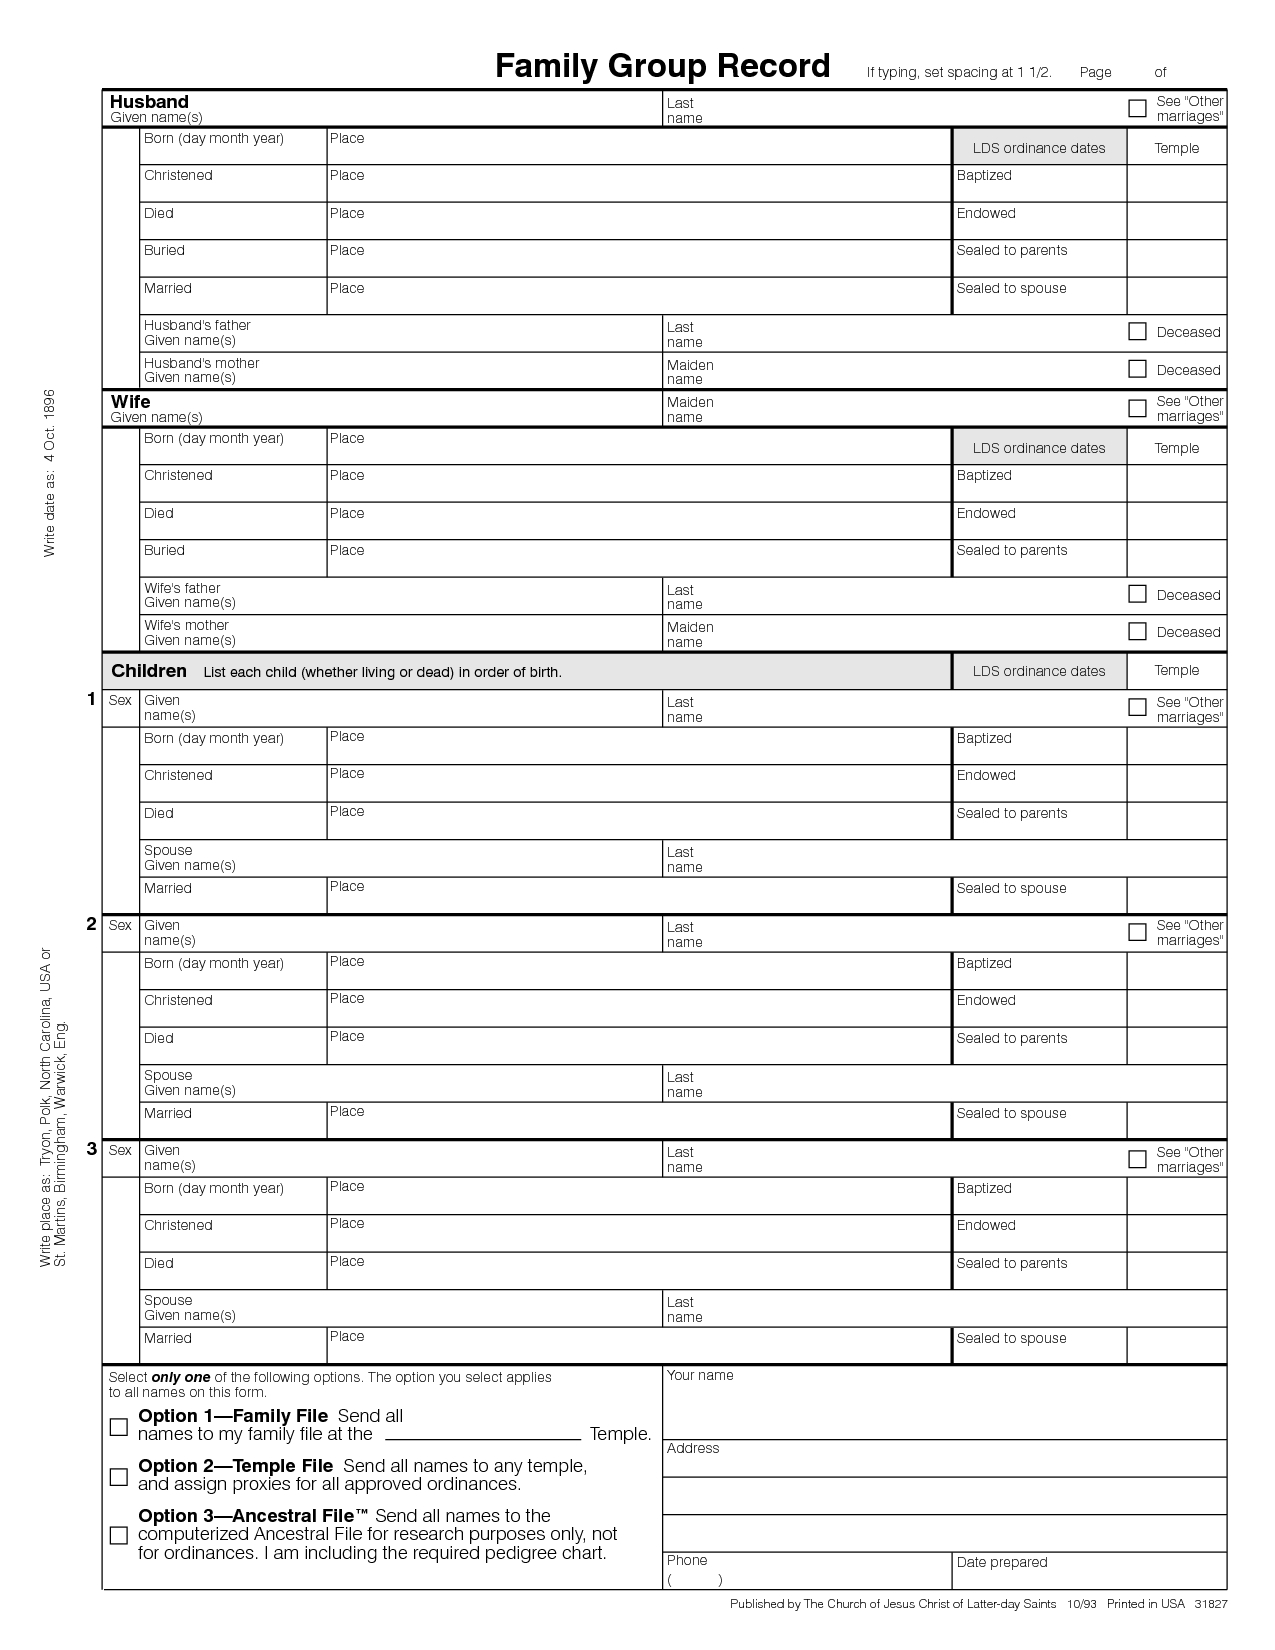 Family Group Sheets Printable | Family Group Sheet - Pdf | Facebook - Free Printable Genealogy Worksheets